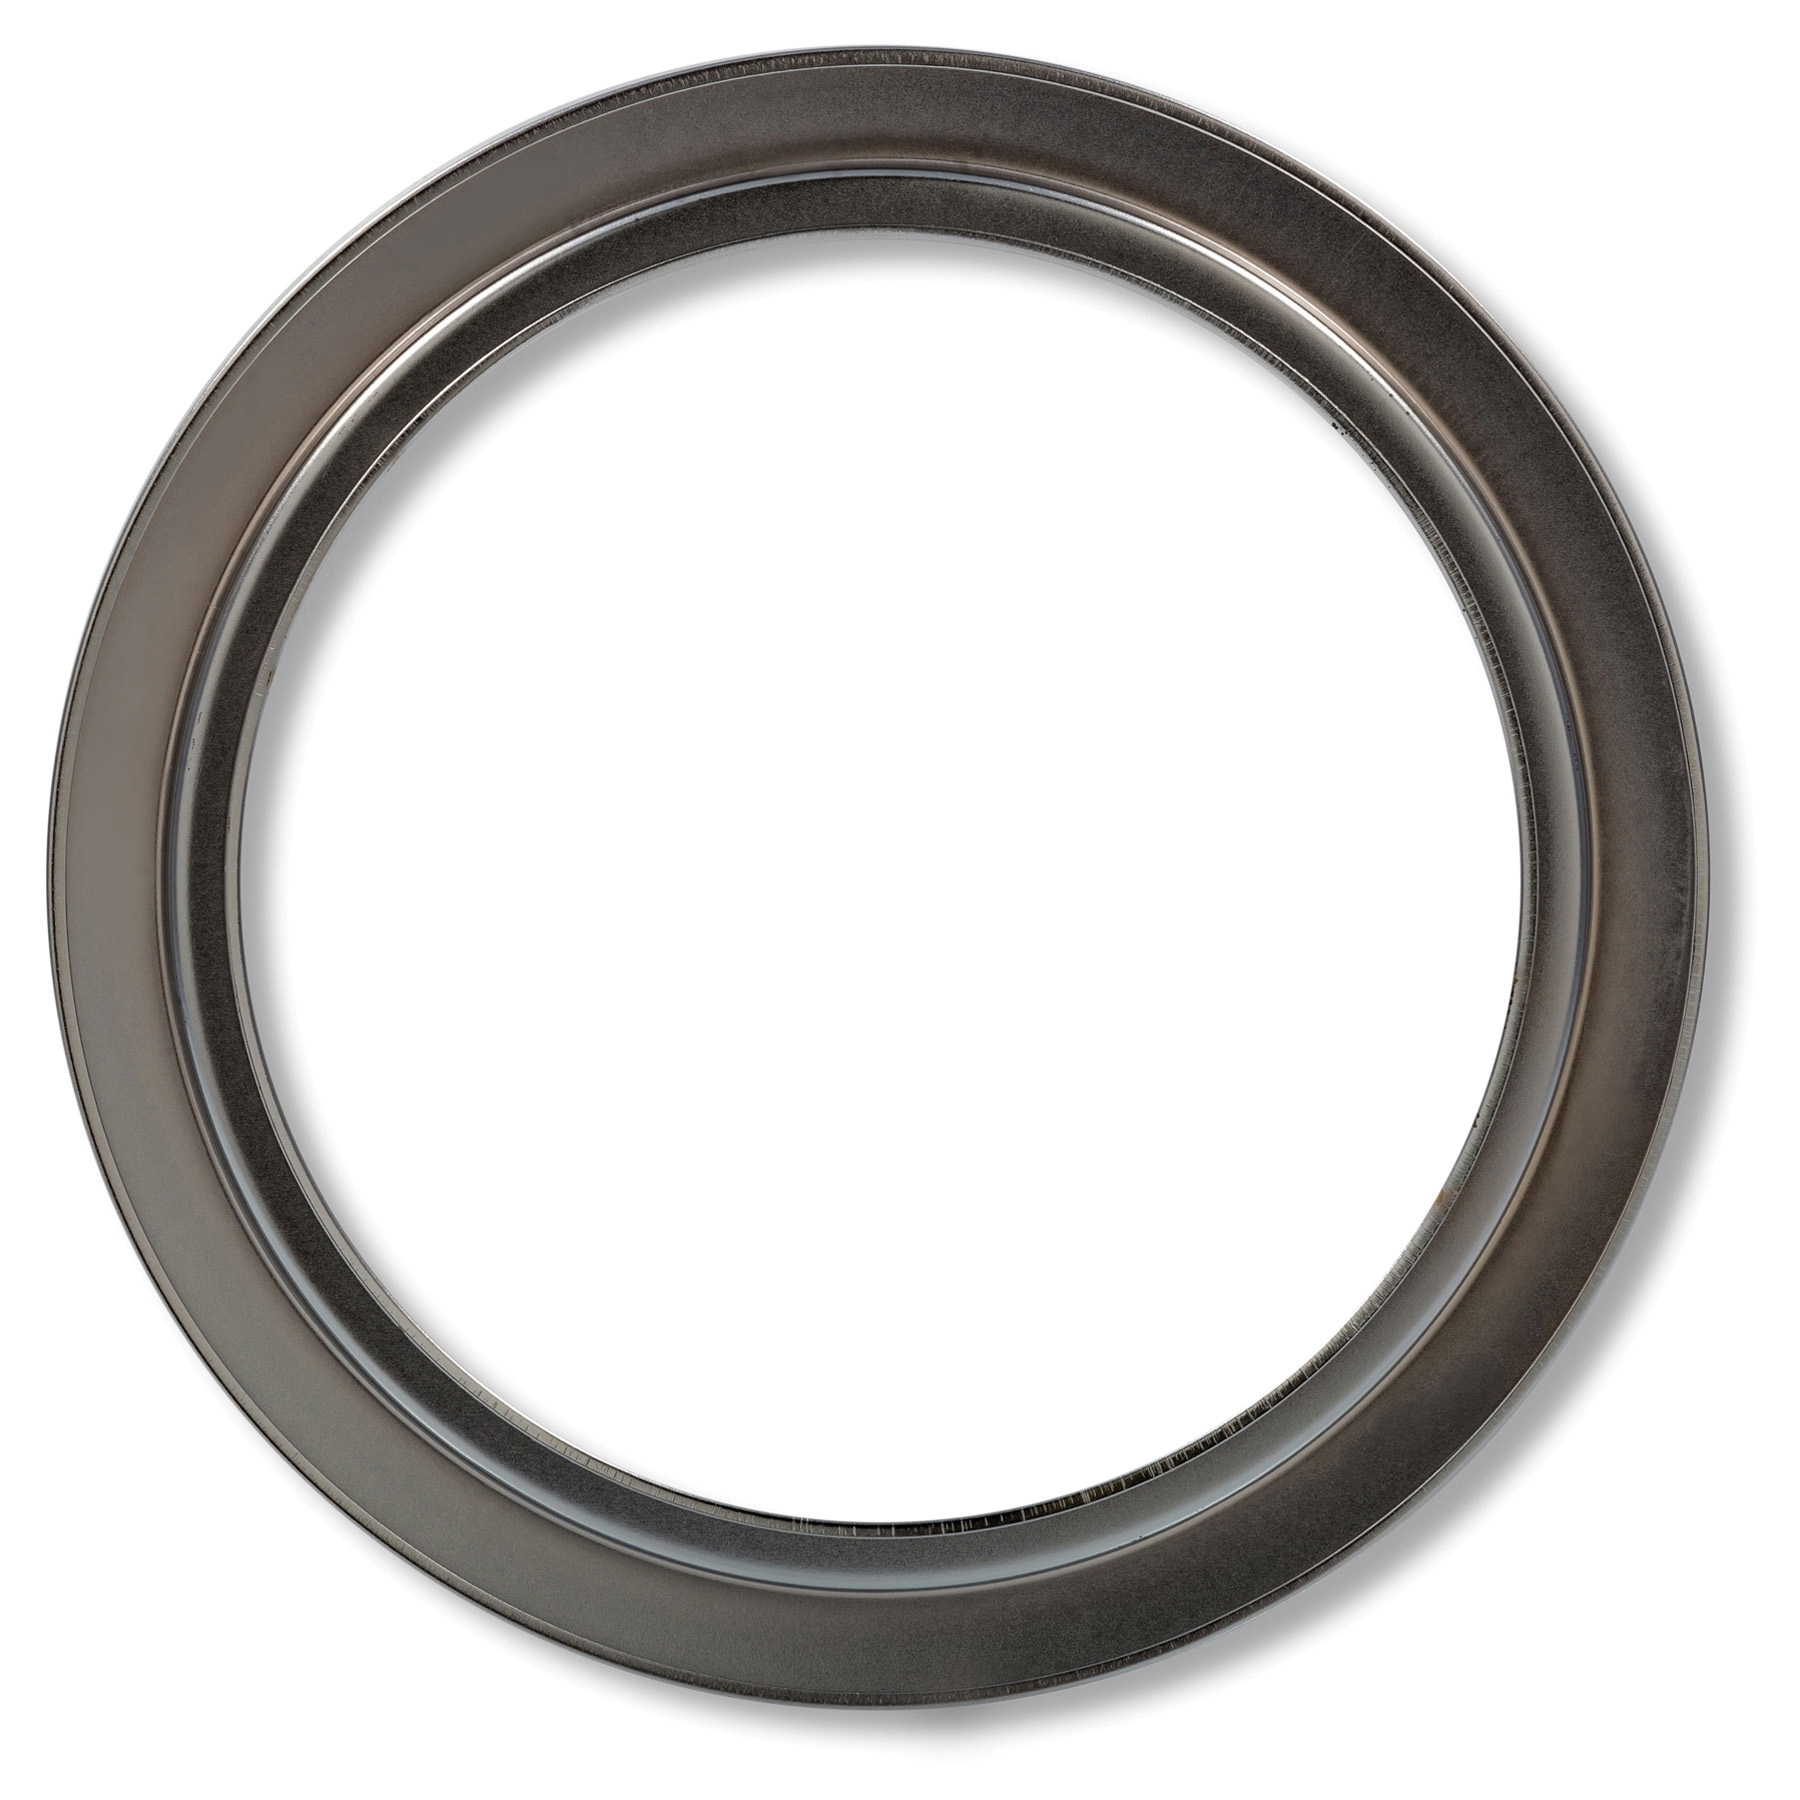 Camco 00303 Trim Ring, 6 in Dia, Chrome - 4